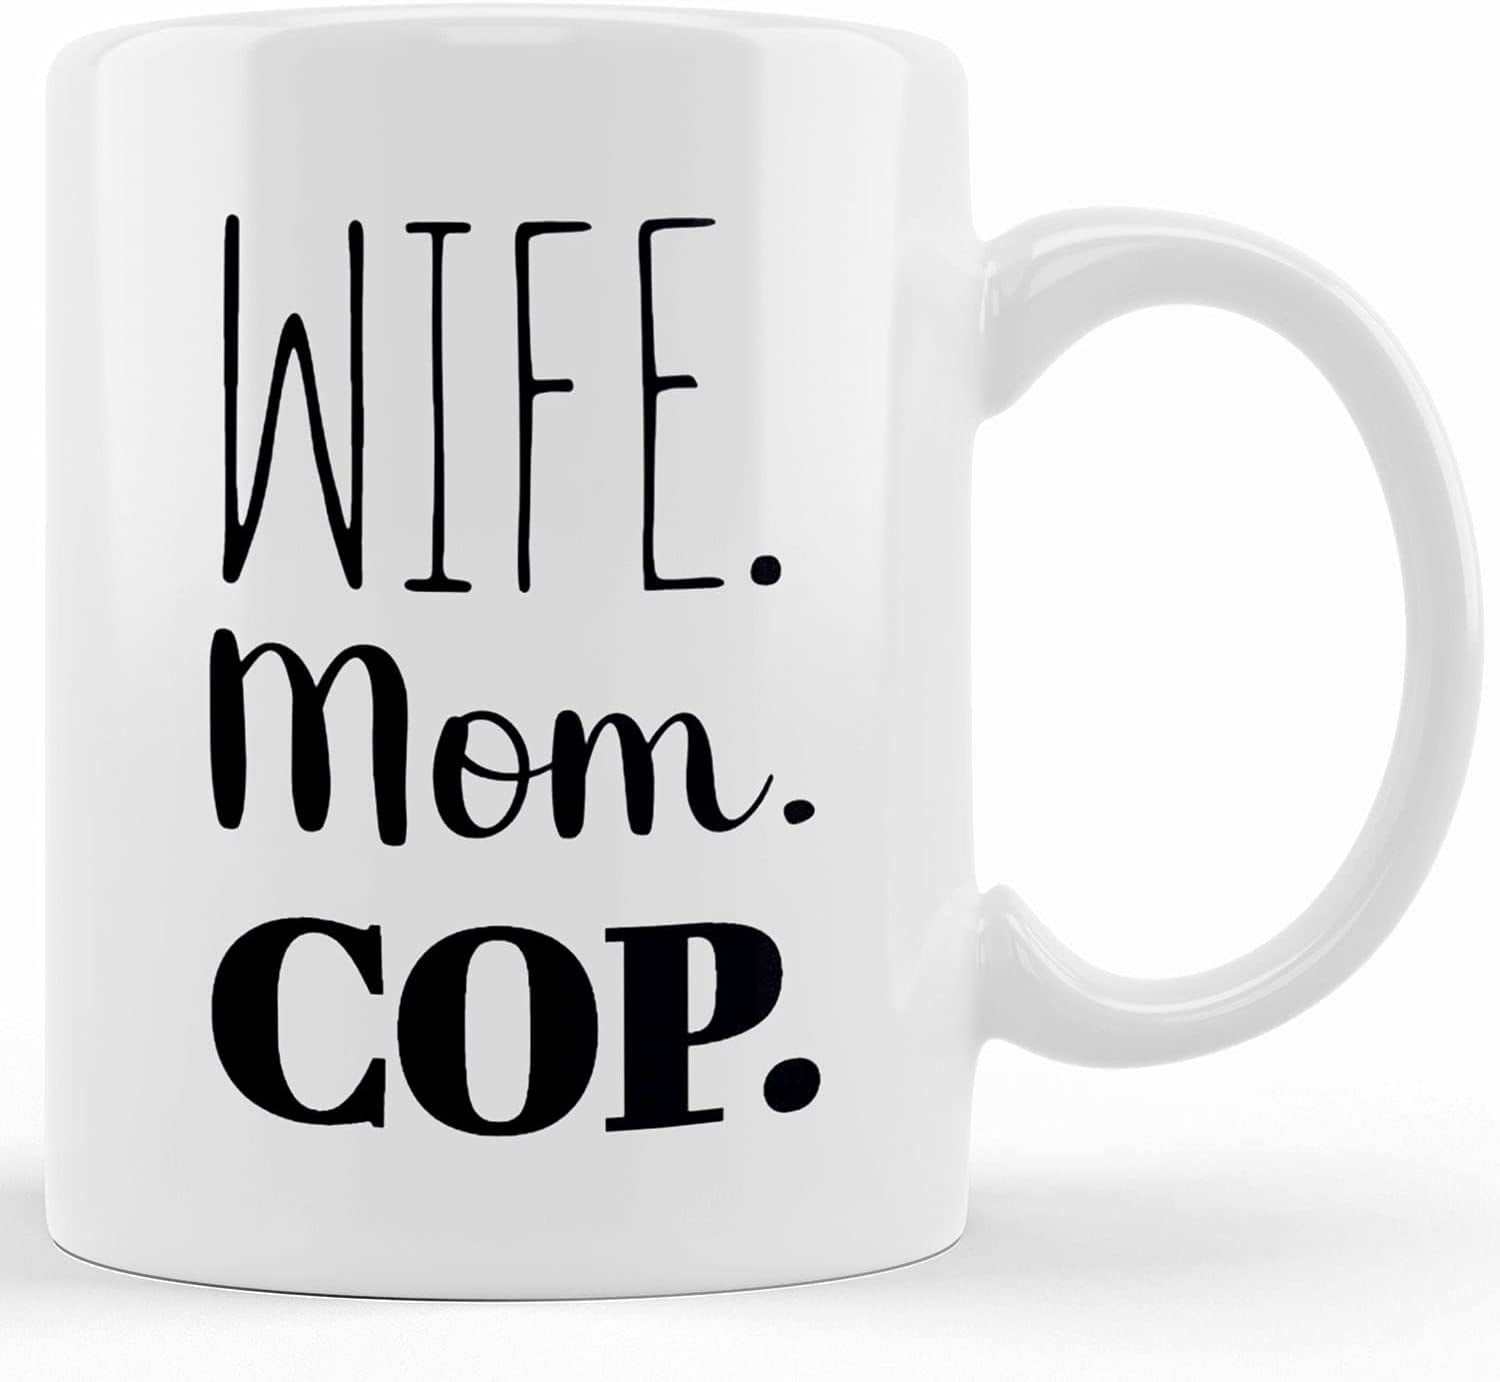 Super sexy police officer mug gift - Funny sassy cop joke